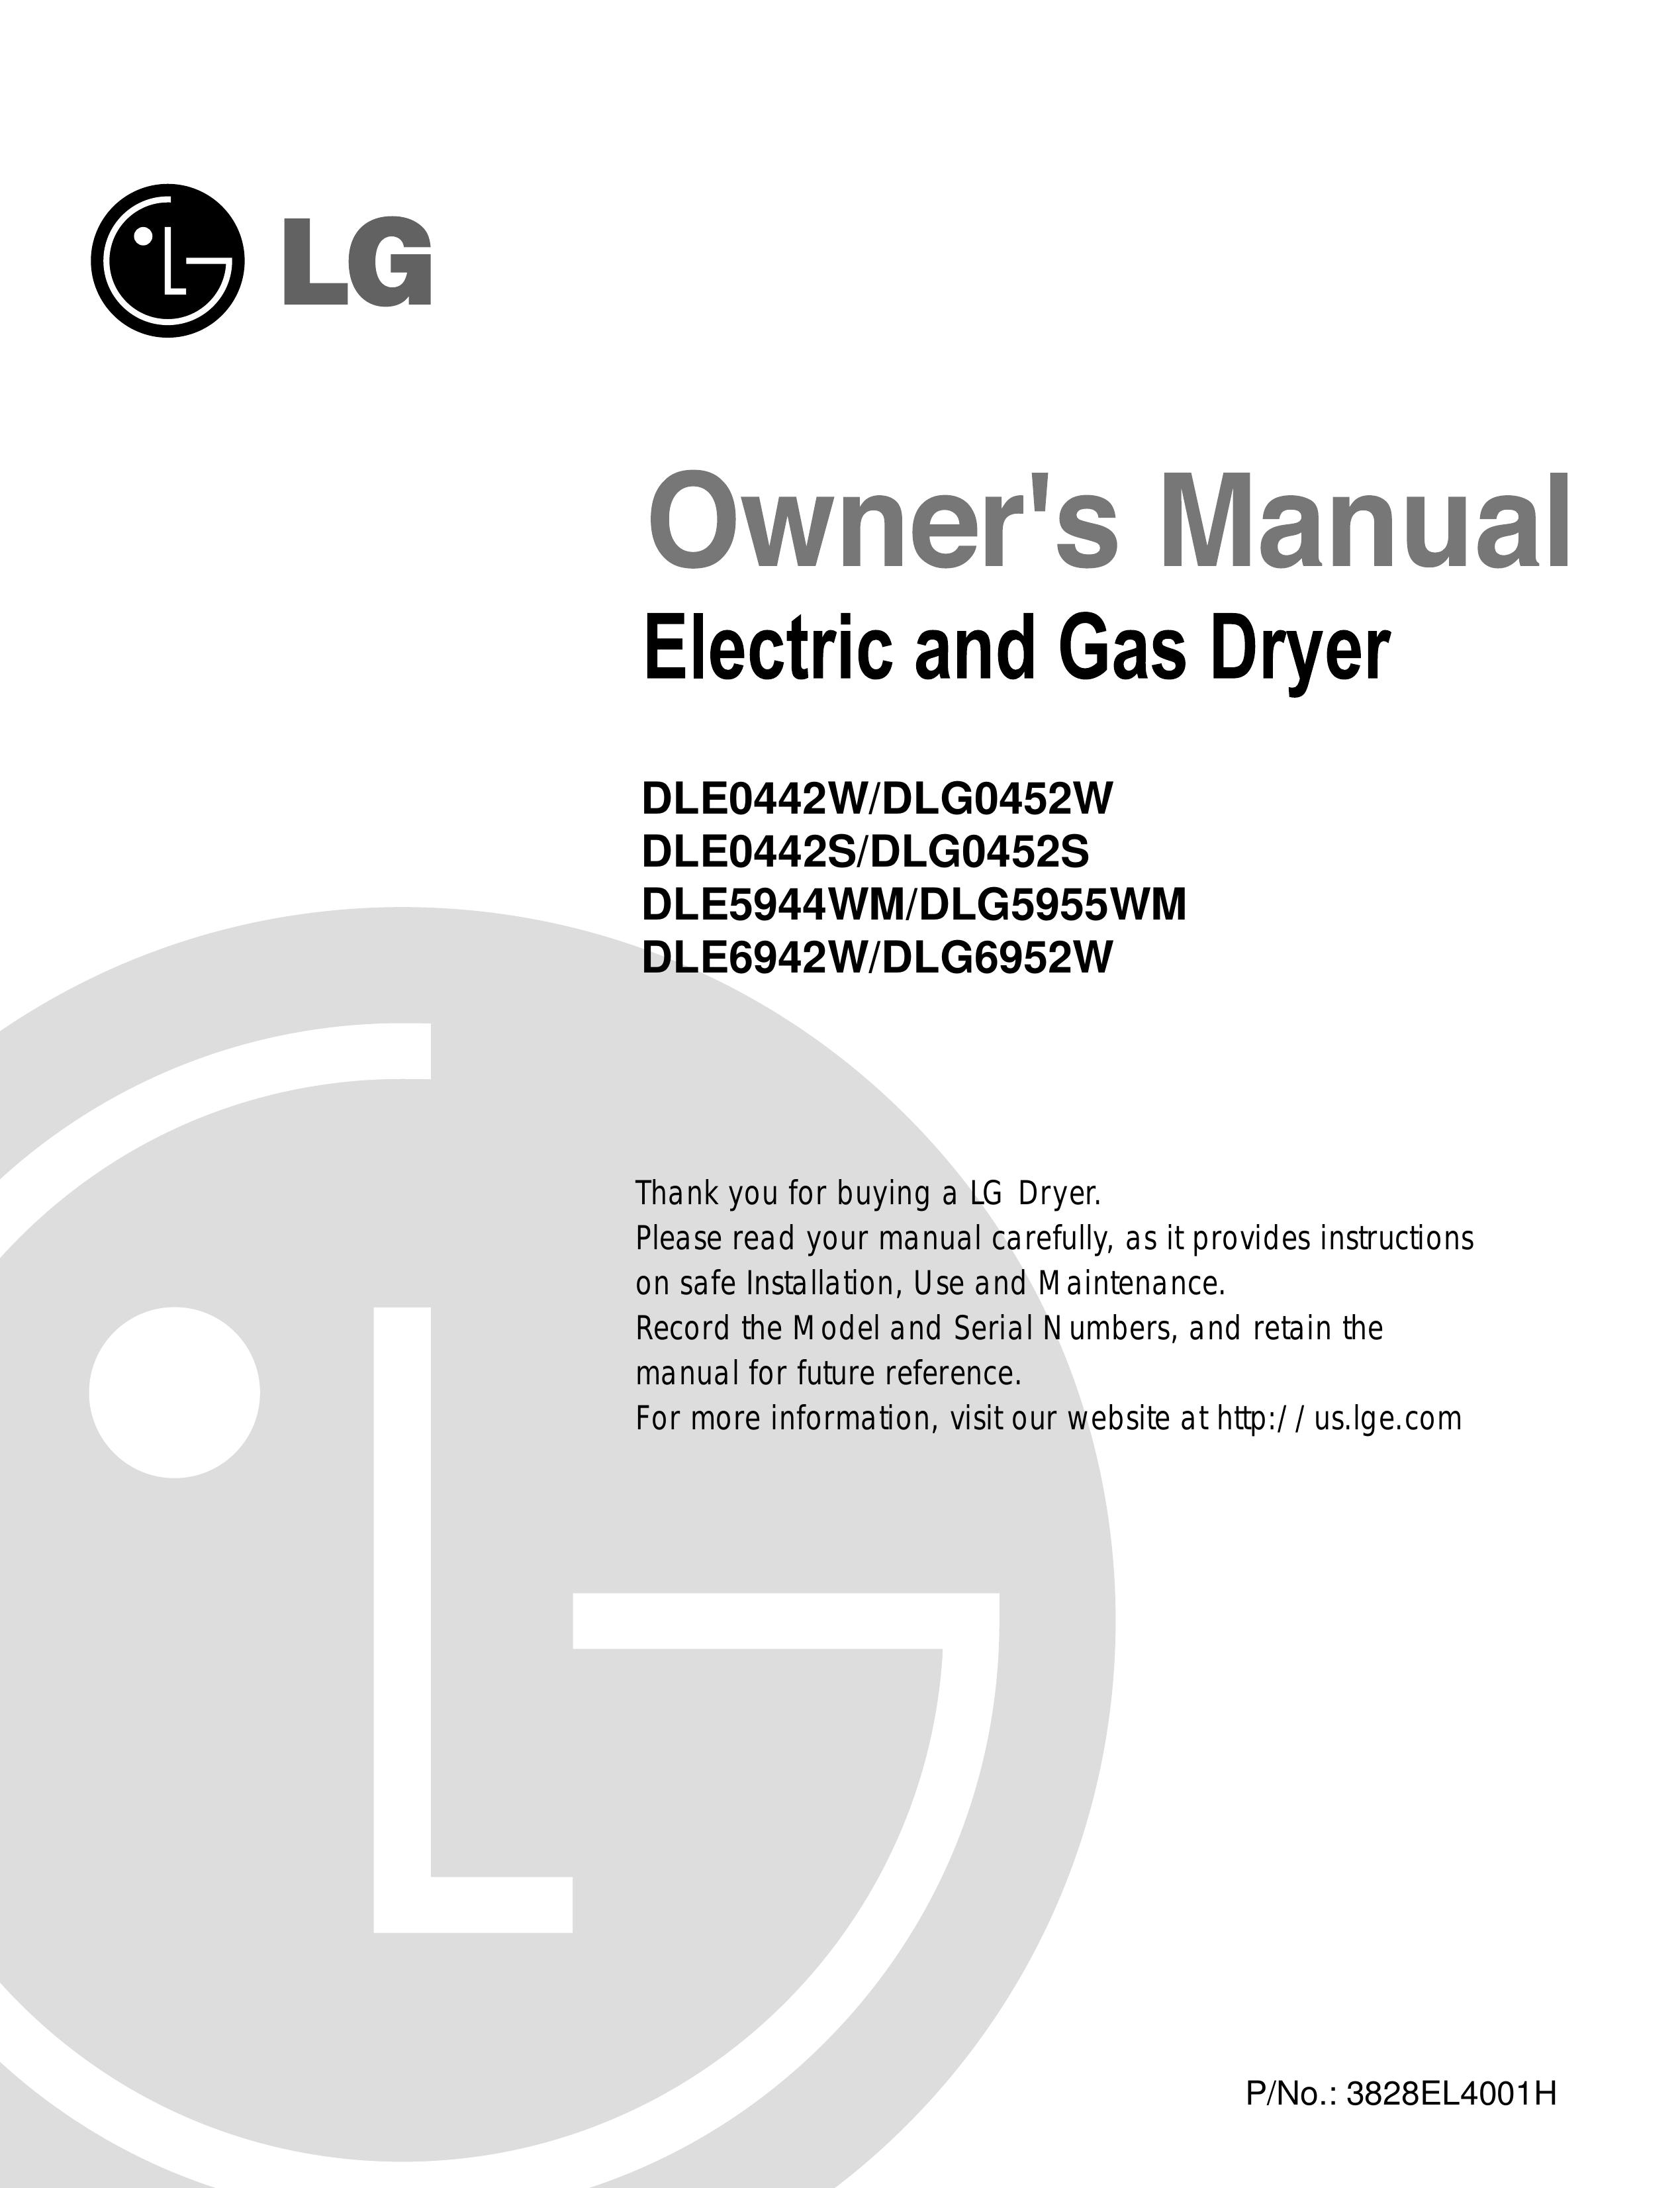 LG Electronics D5955WM Clothes Dryer User Manual